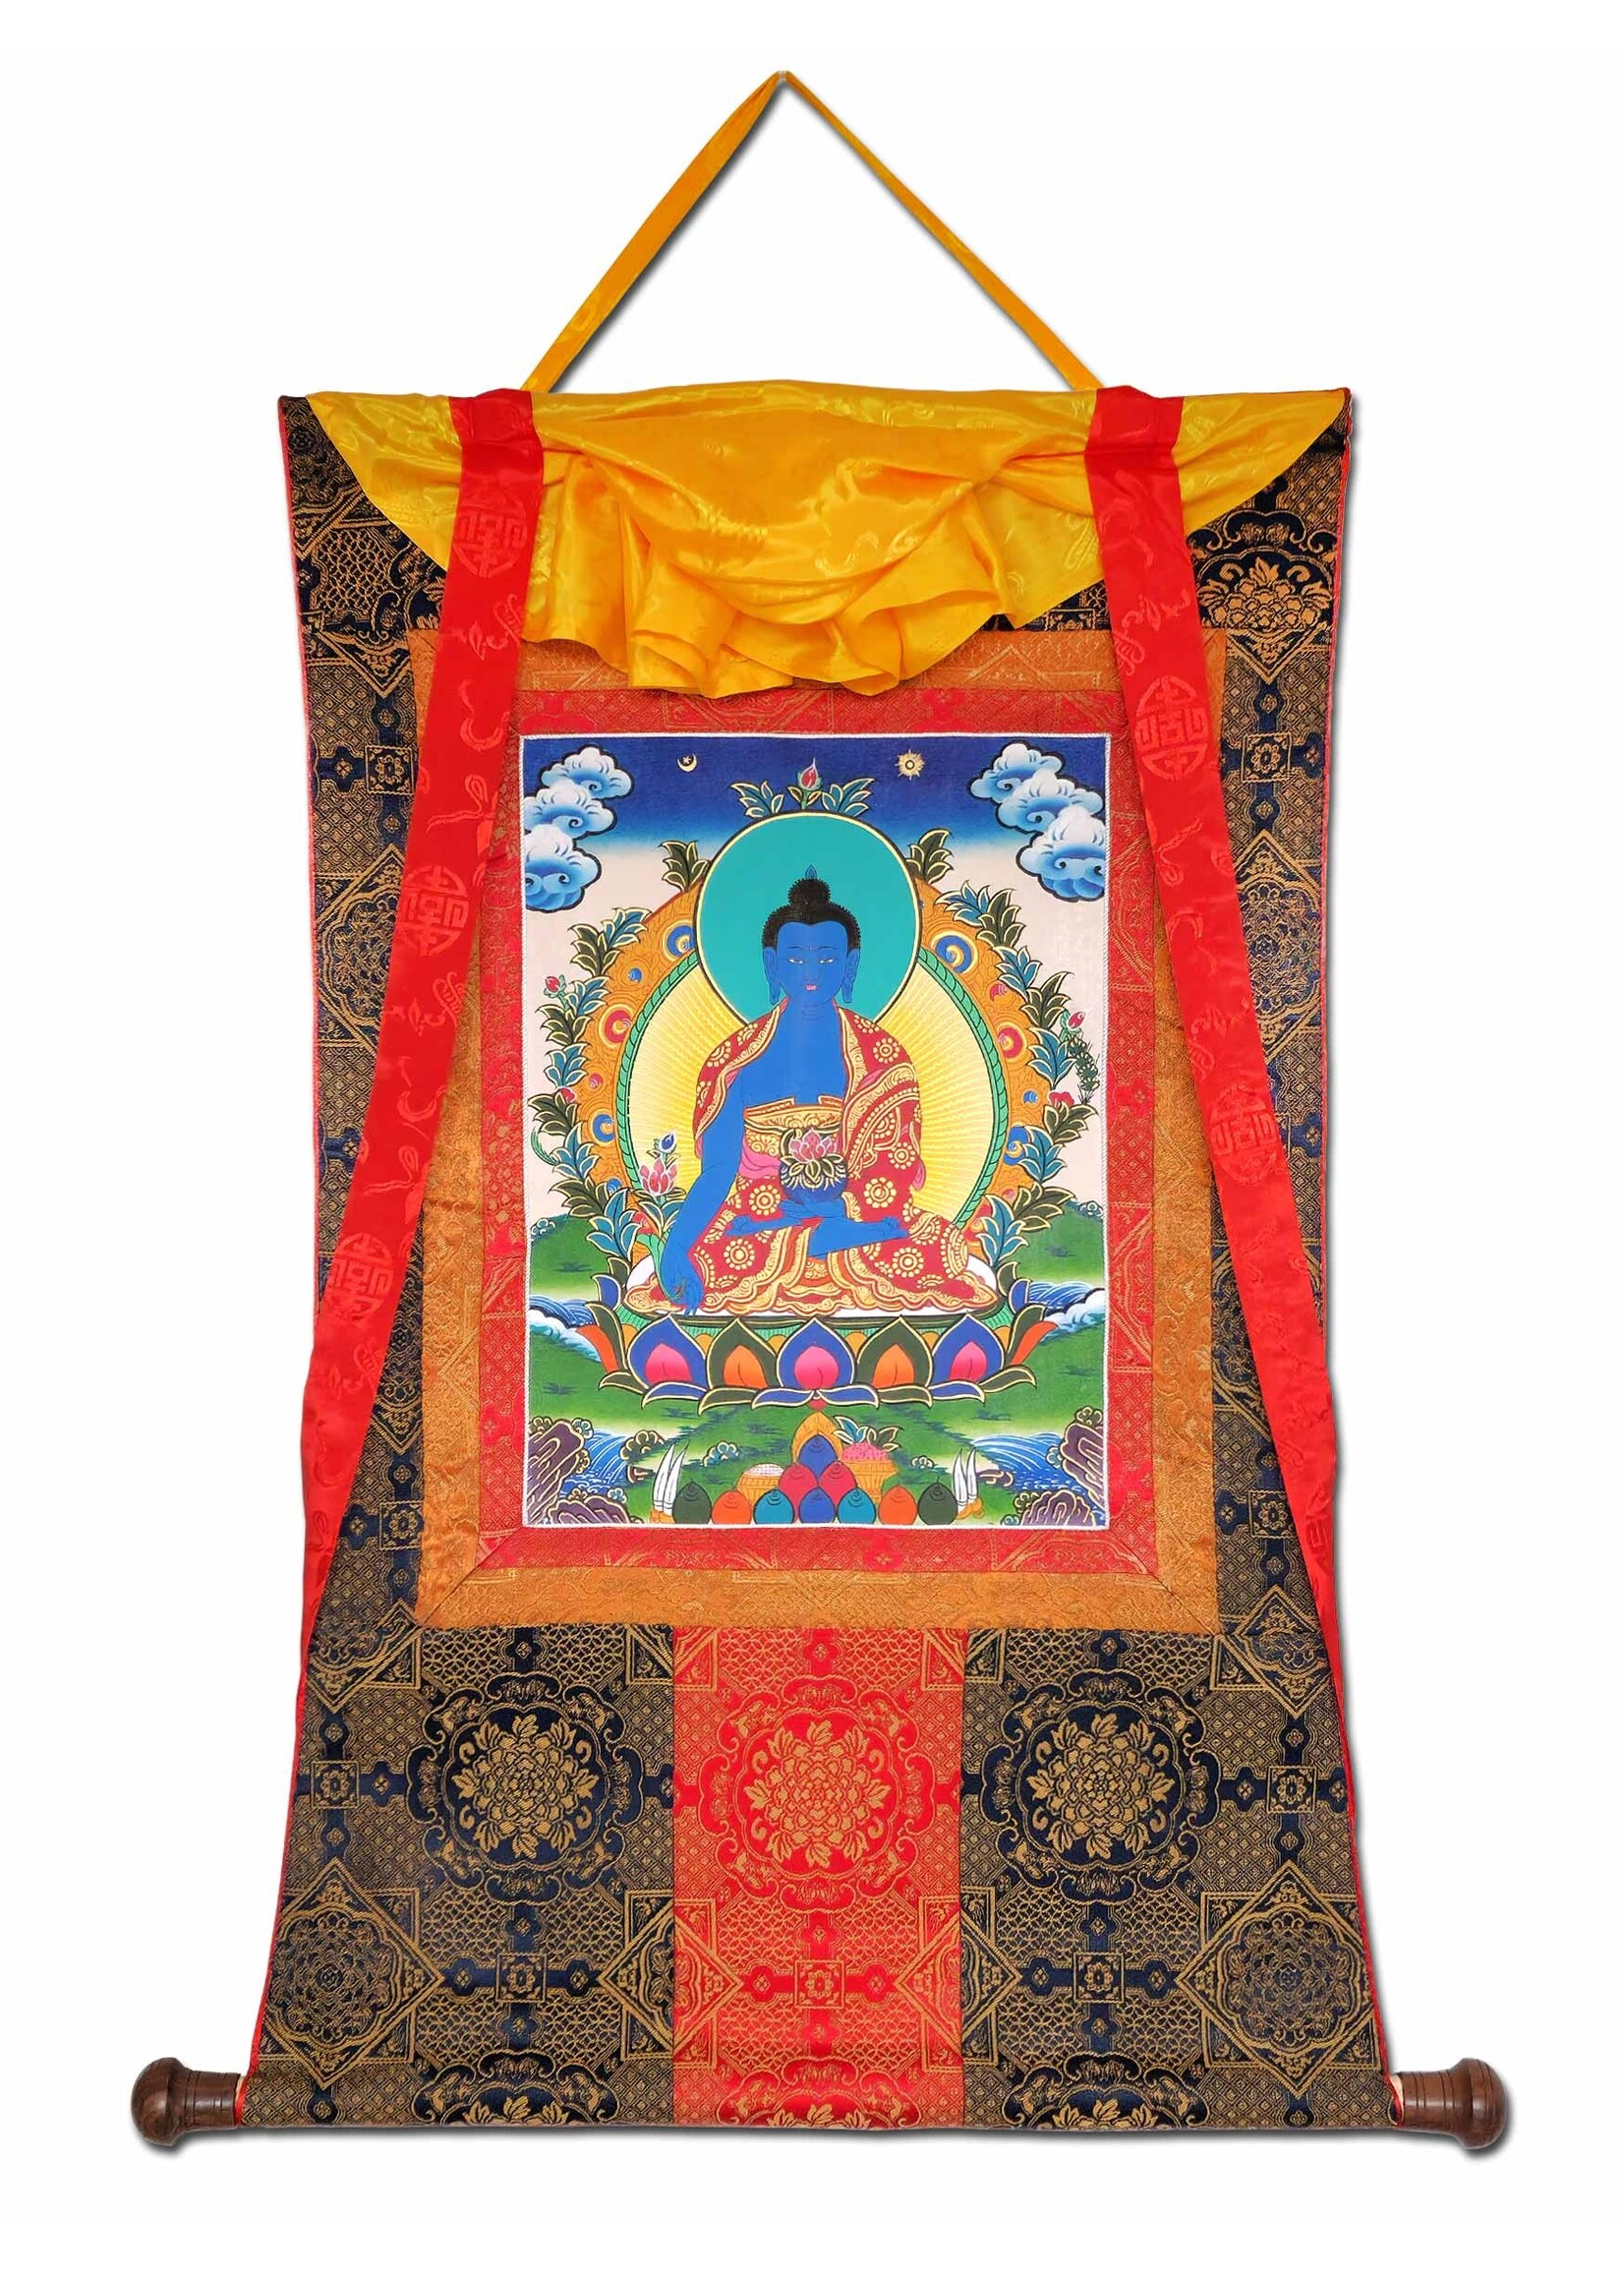 Tibetisches Thangka Medizin-Buddha aus hochwertigem Brokat, 80 x 55 cm